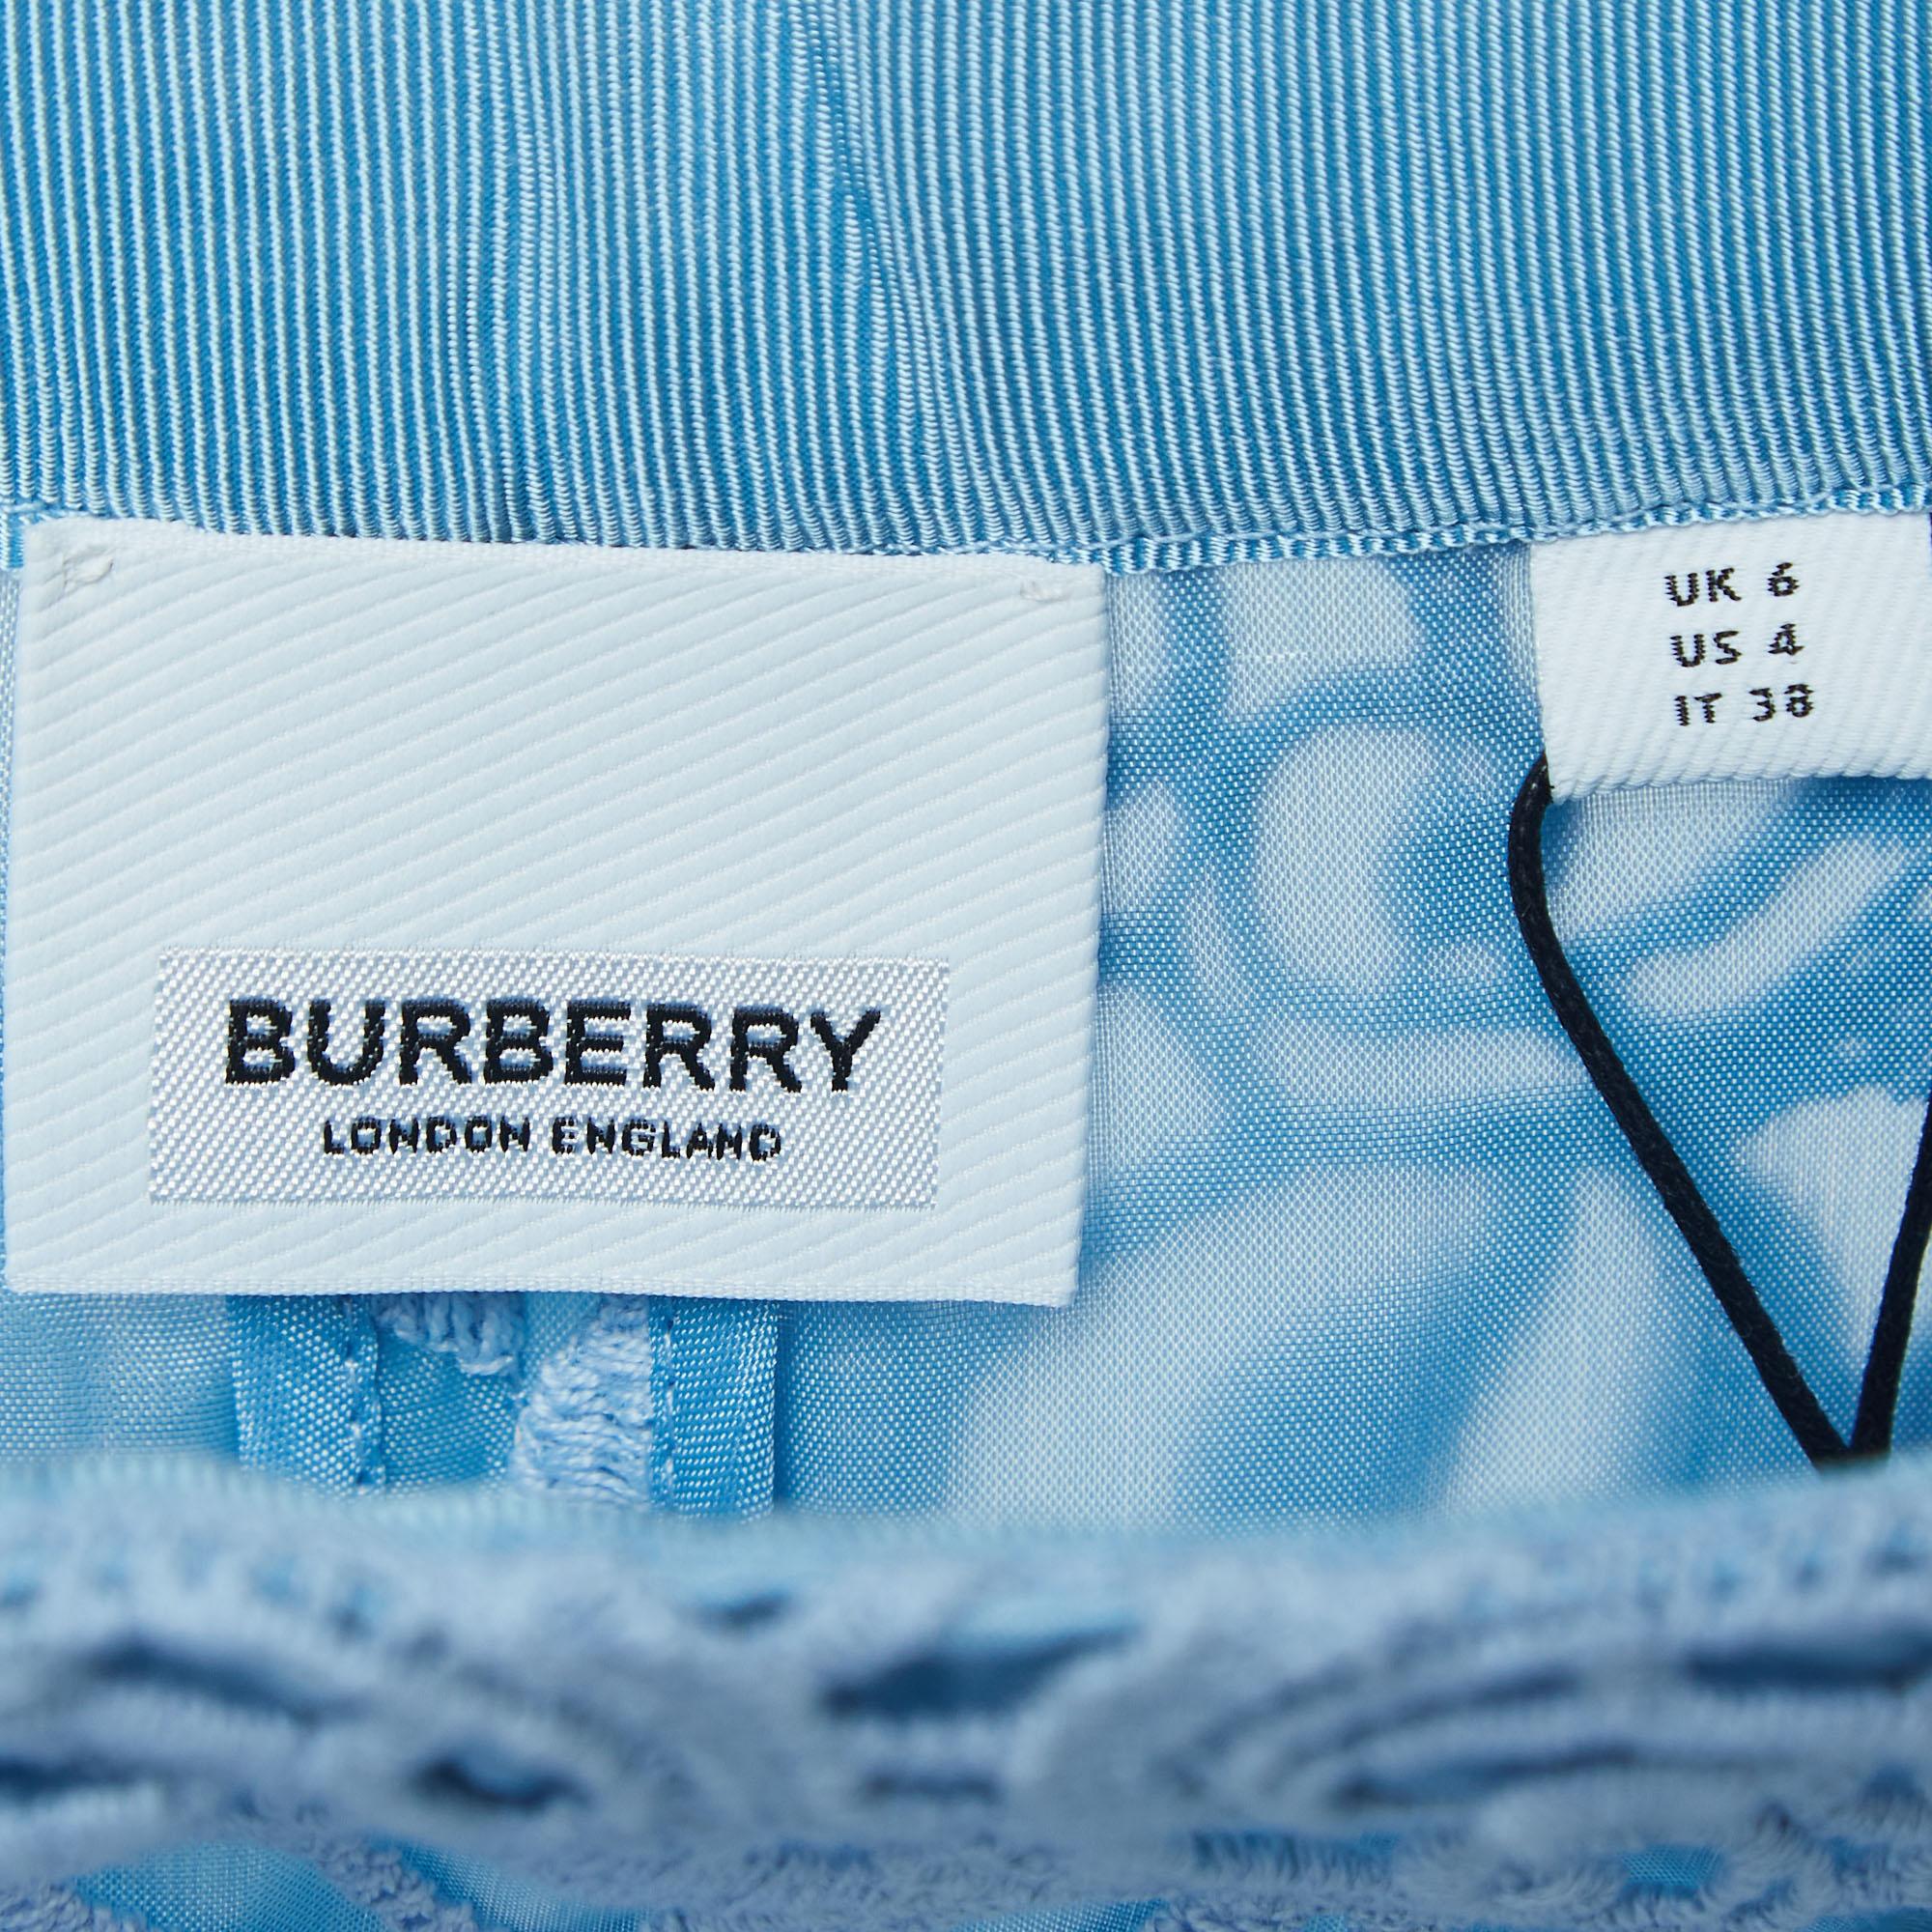 Burberry Pale Blue Lace Pencil Skirt S For Sale 1